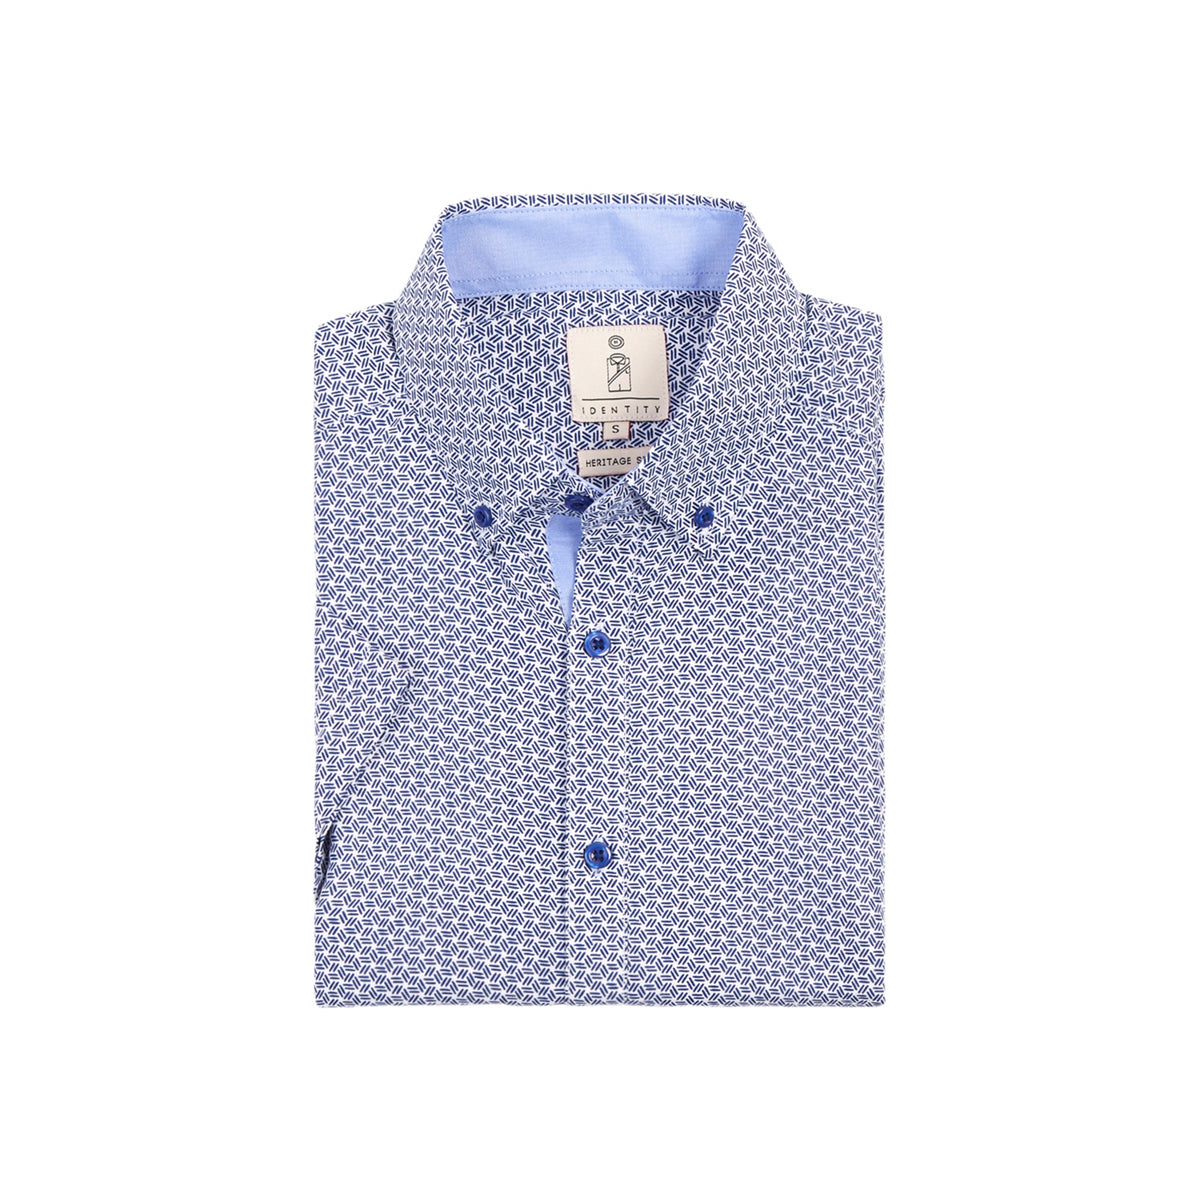 K1555 Mens REGULAR FIT Heritage Prints Button Down Short Sleeve Shirt - IDENTITY Apparel Shop